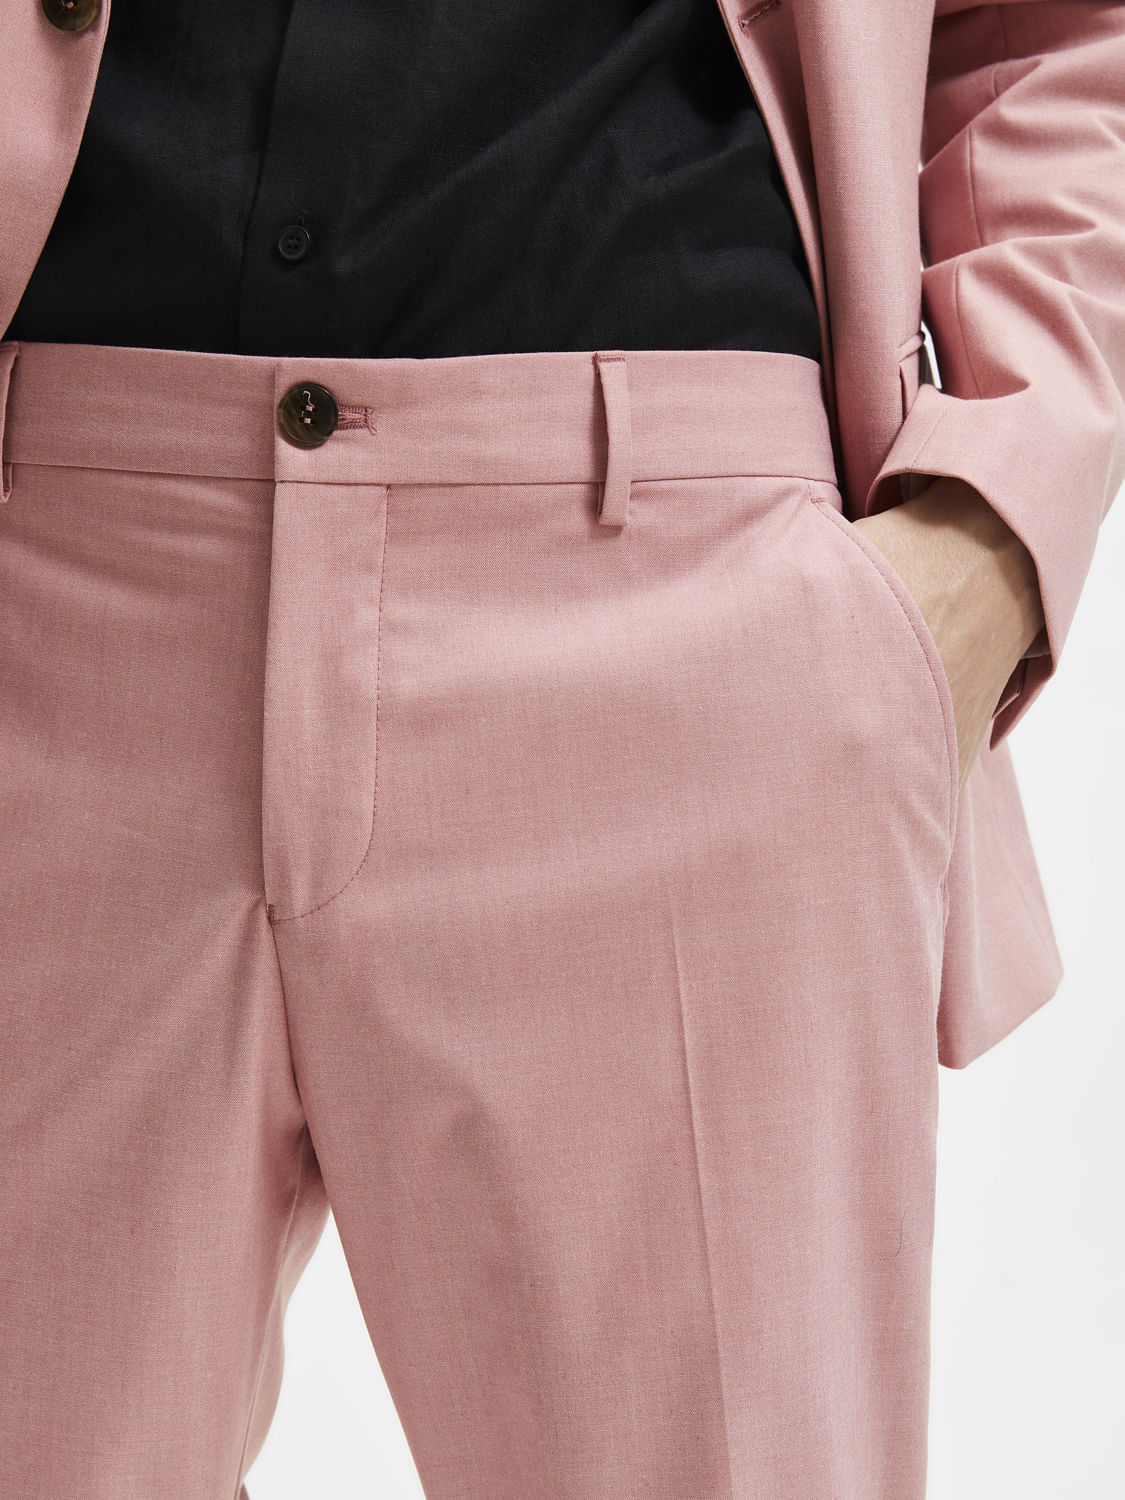 Bar III Men's Slim-Fit Wool Suit Pants, Created for Macy's - Macy's